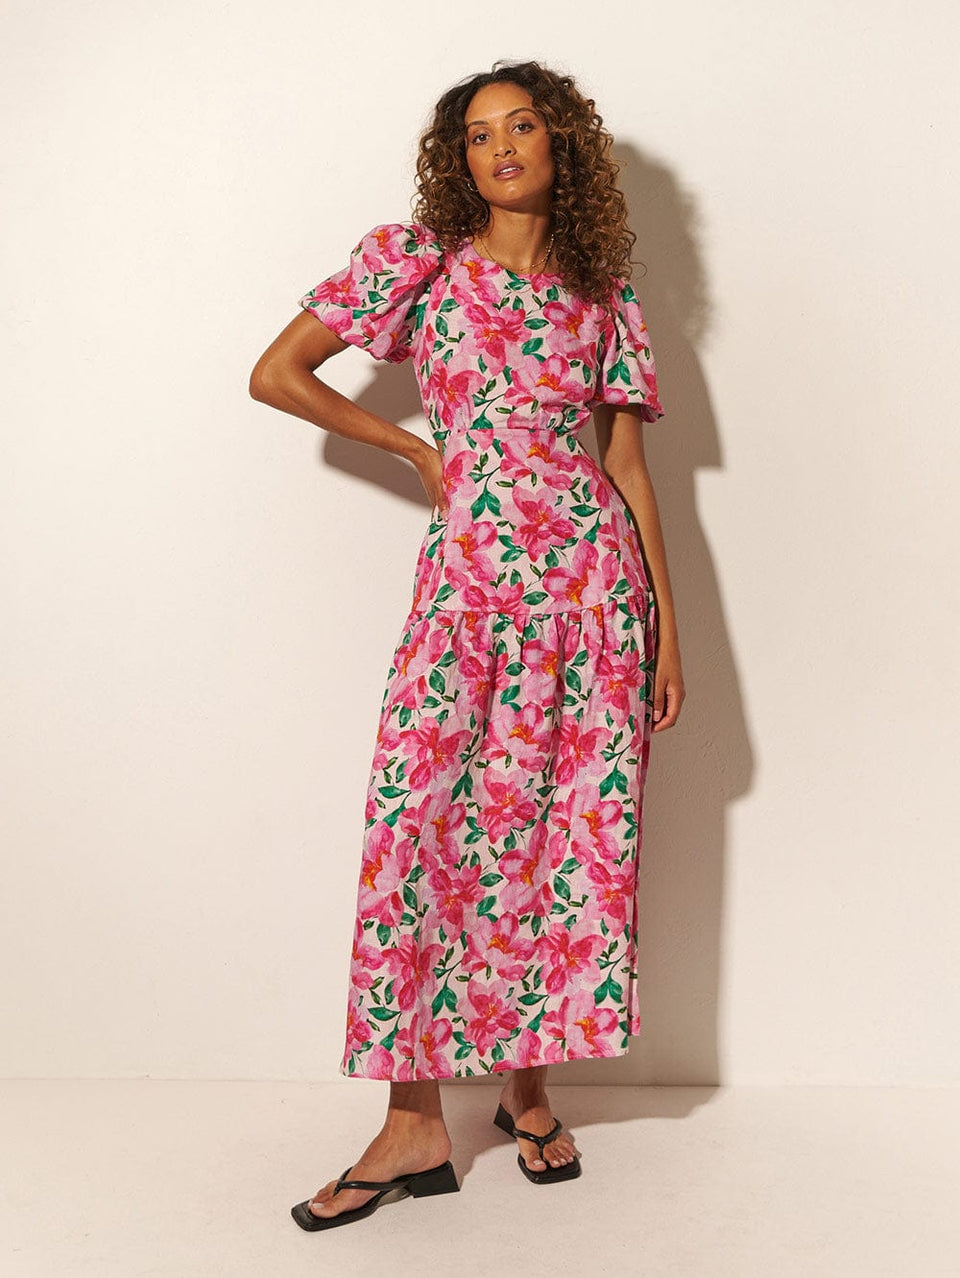 KIVARI Antonia Maxi Dress | Model wearing Pink and Green Floral Dress